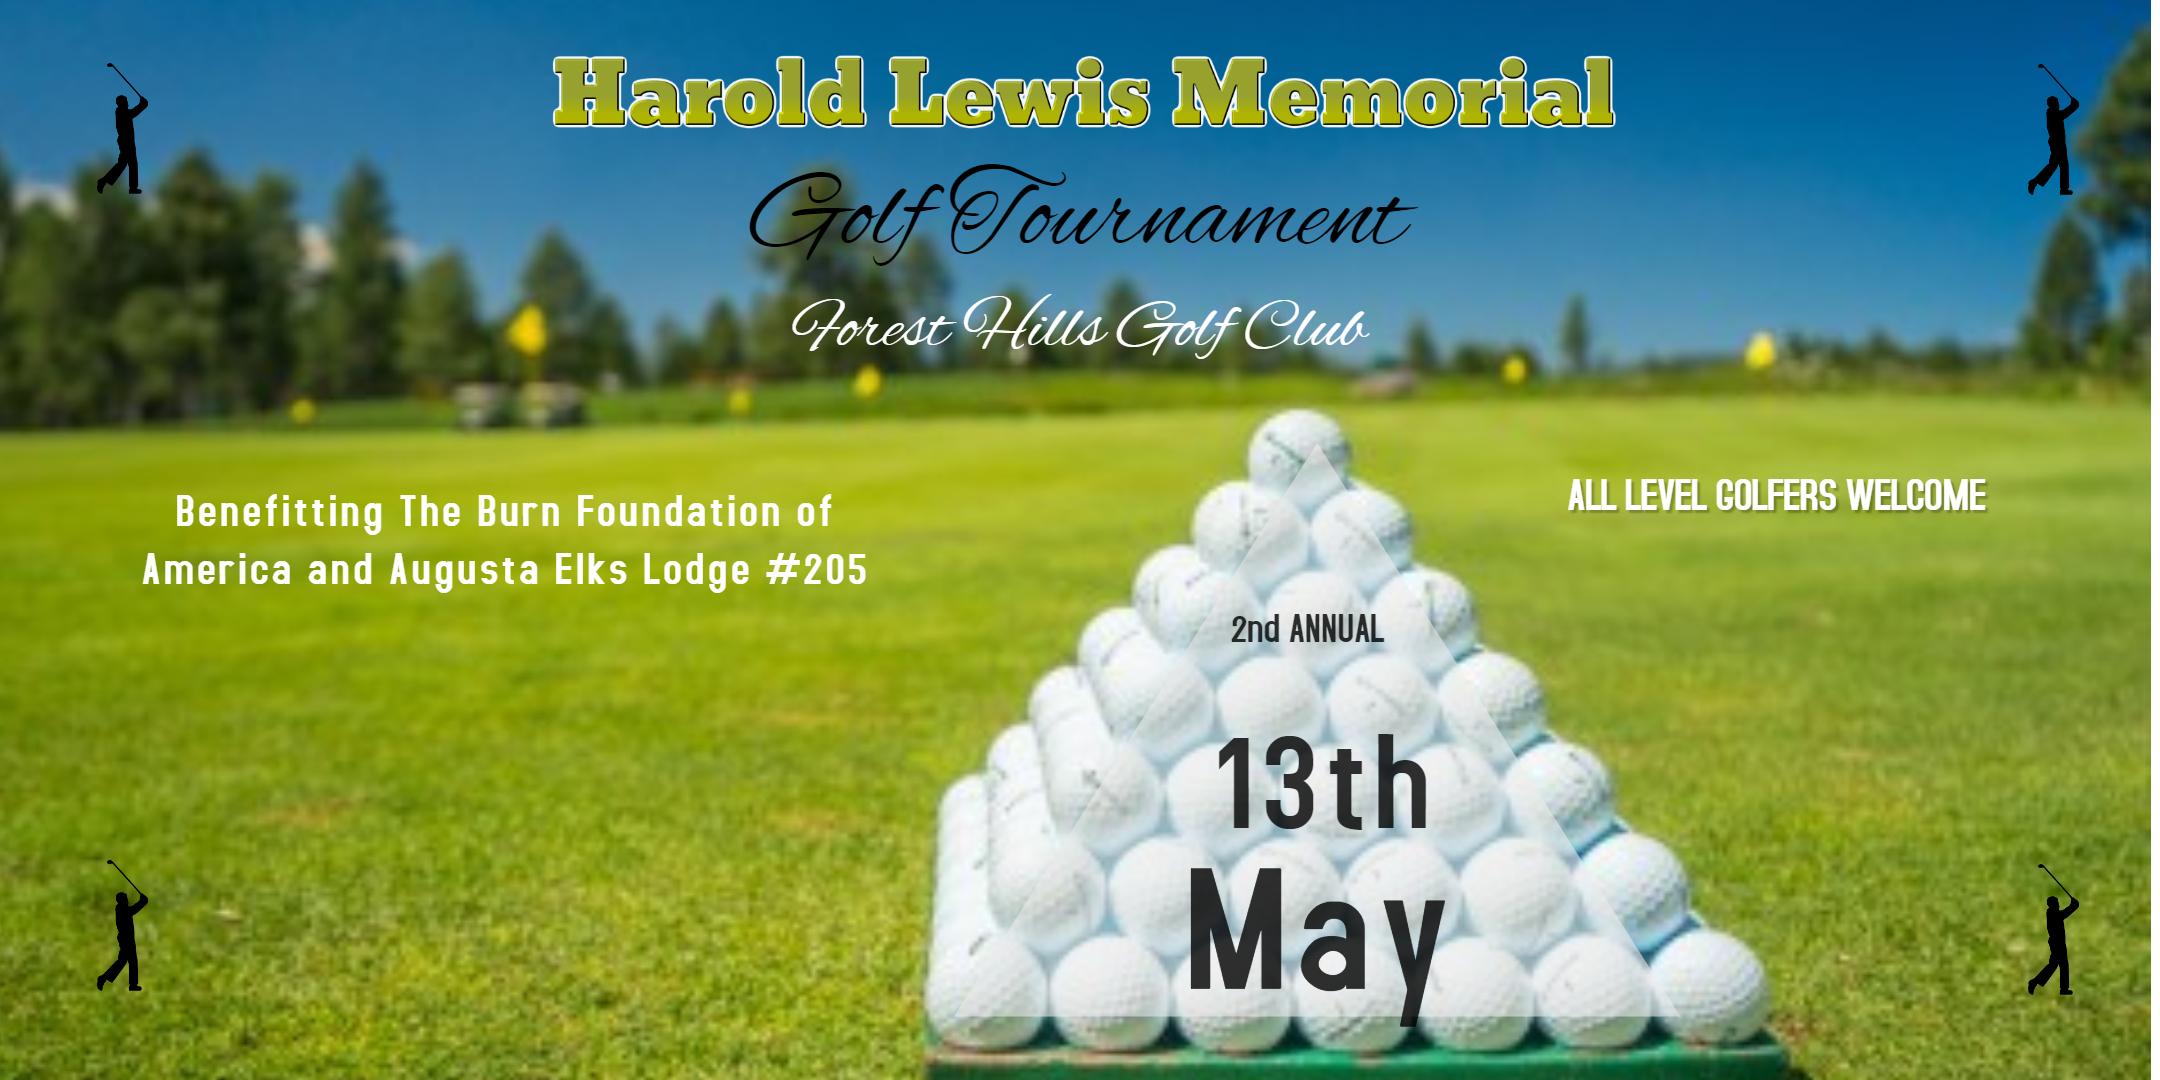 2nd Annual Harold Lewis Memorial Golf Tournament